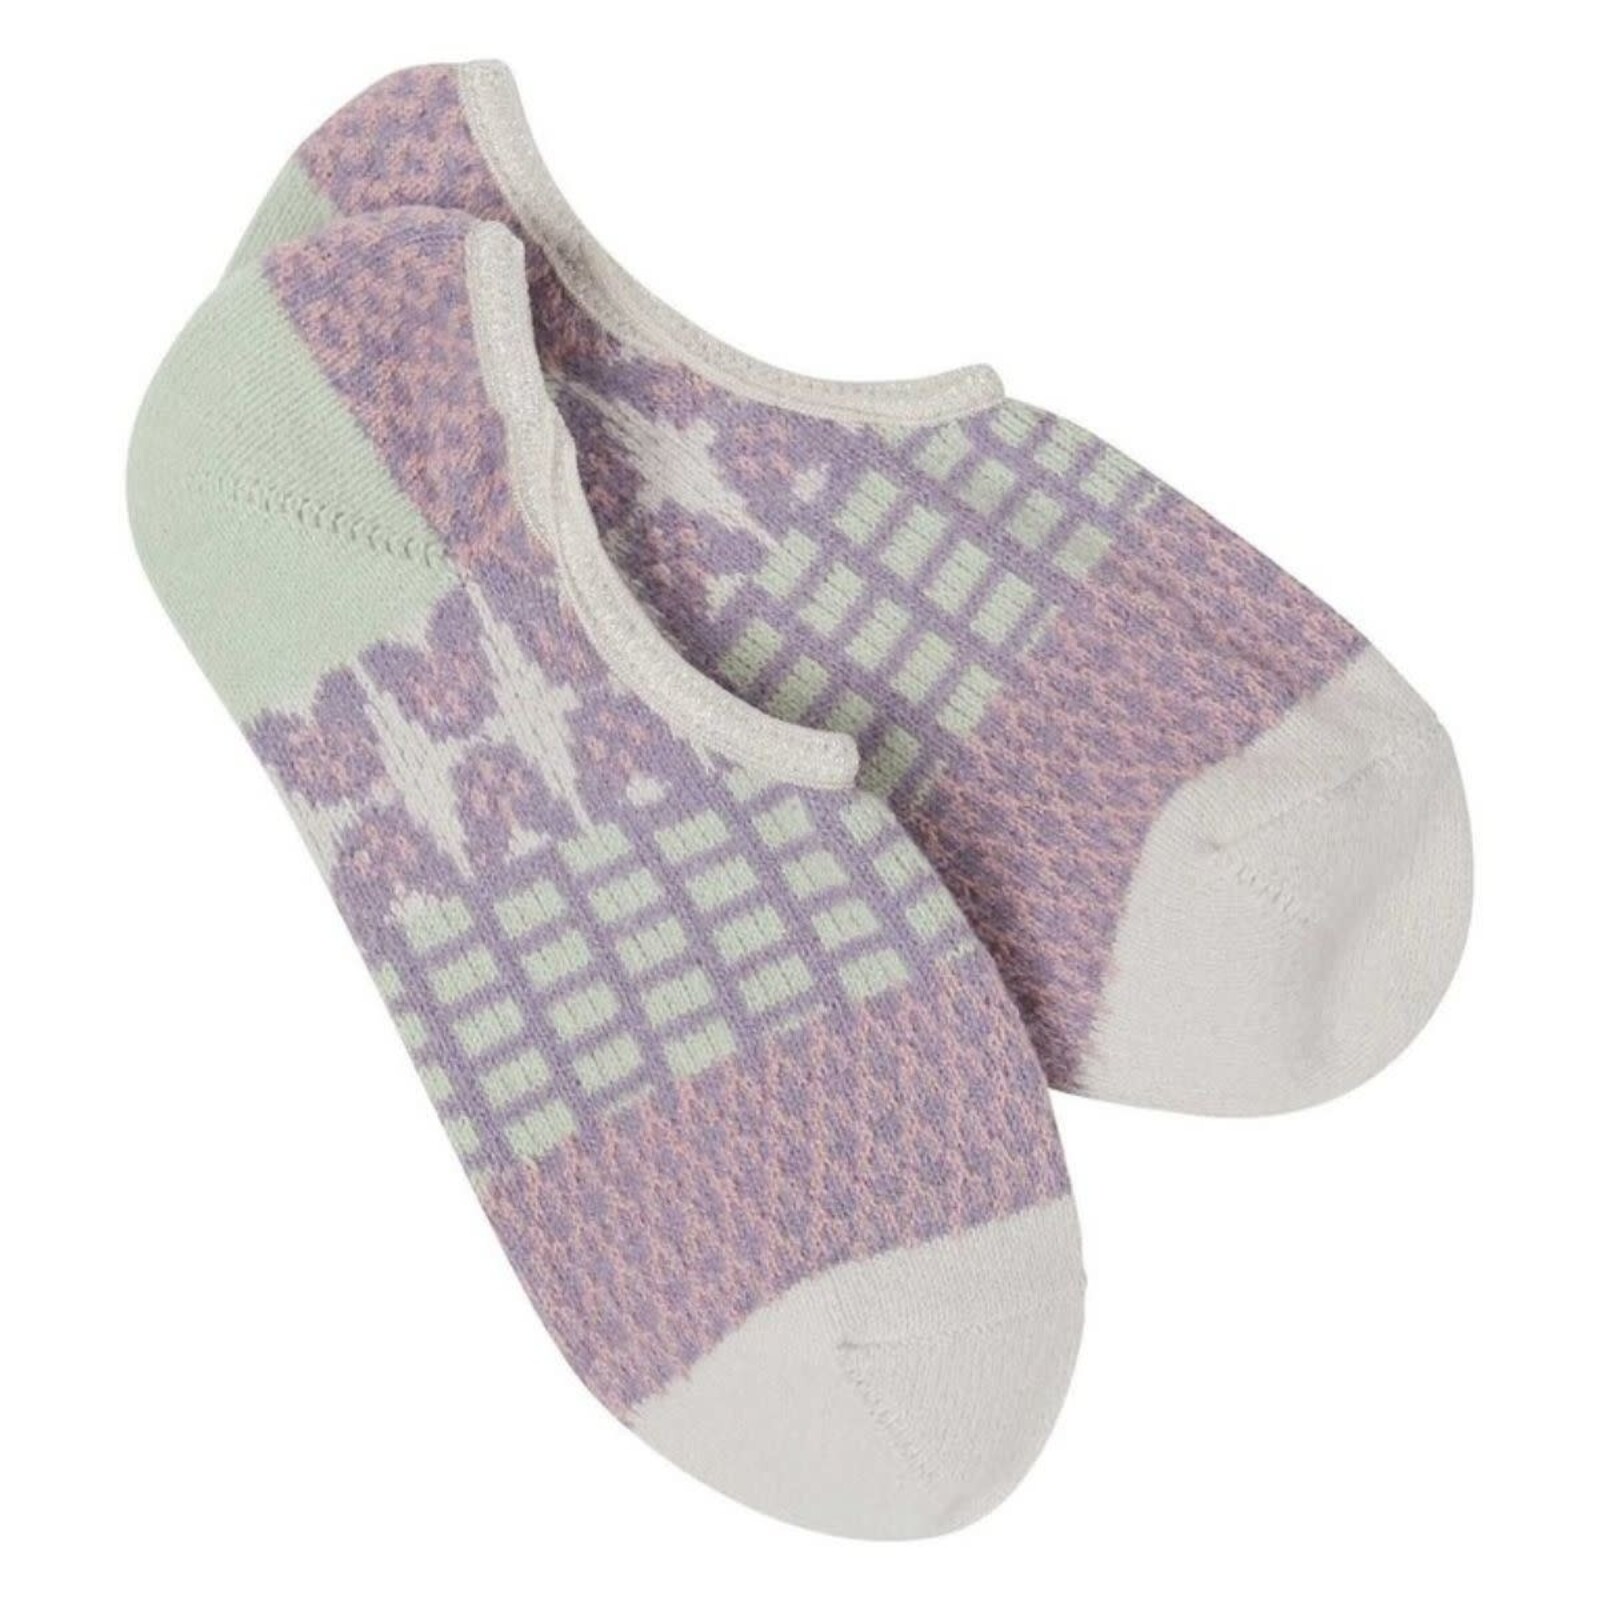 World's Softest GALLERY FOOTSIE Sock WS66604 loading=